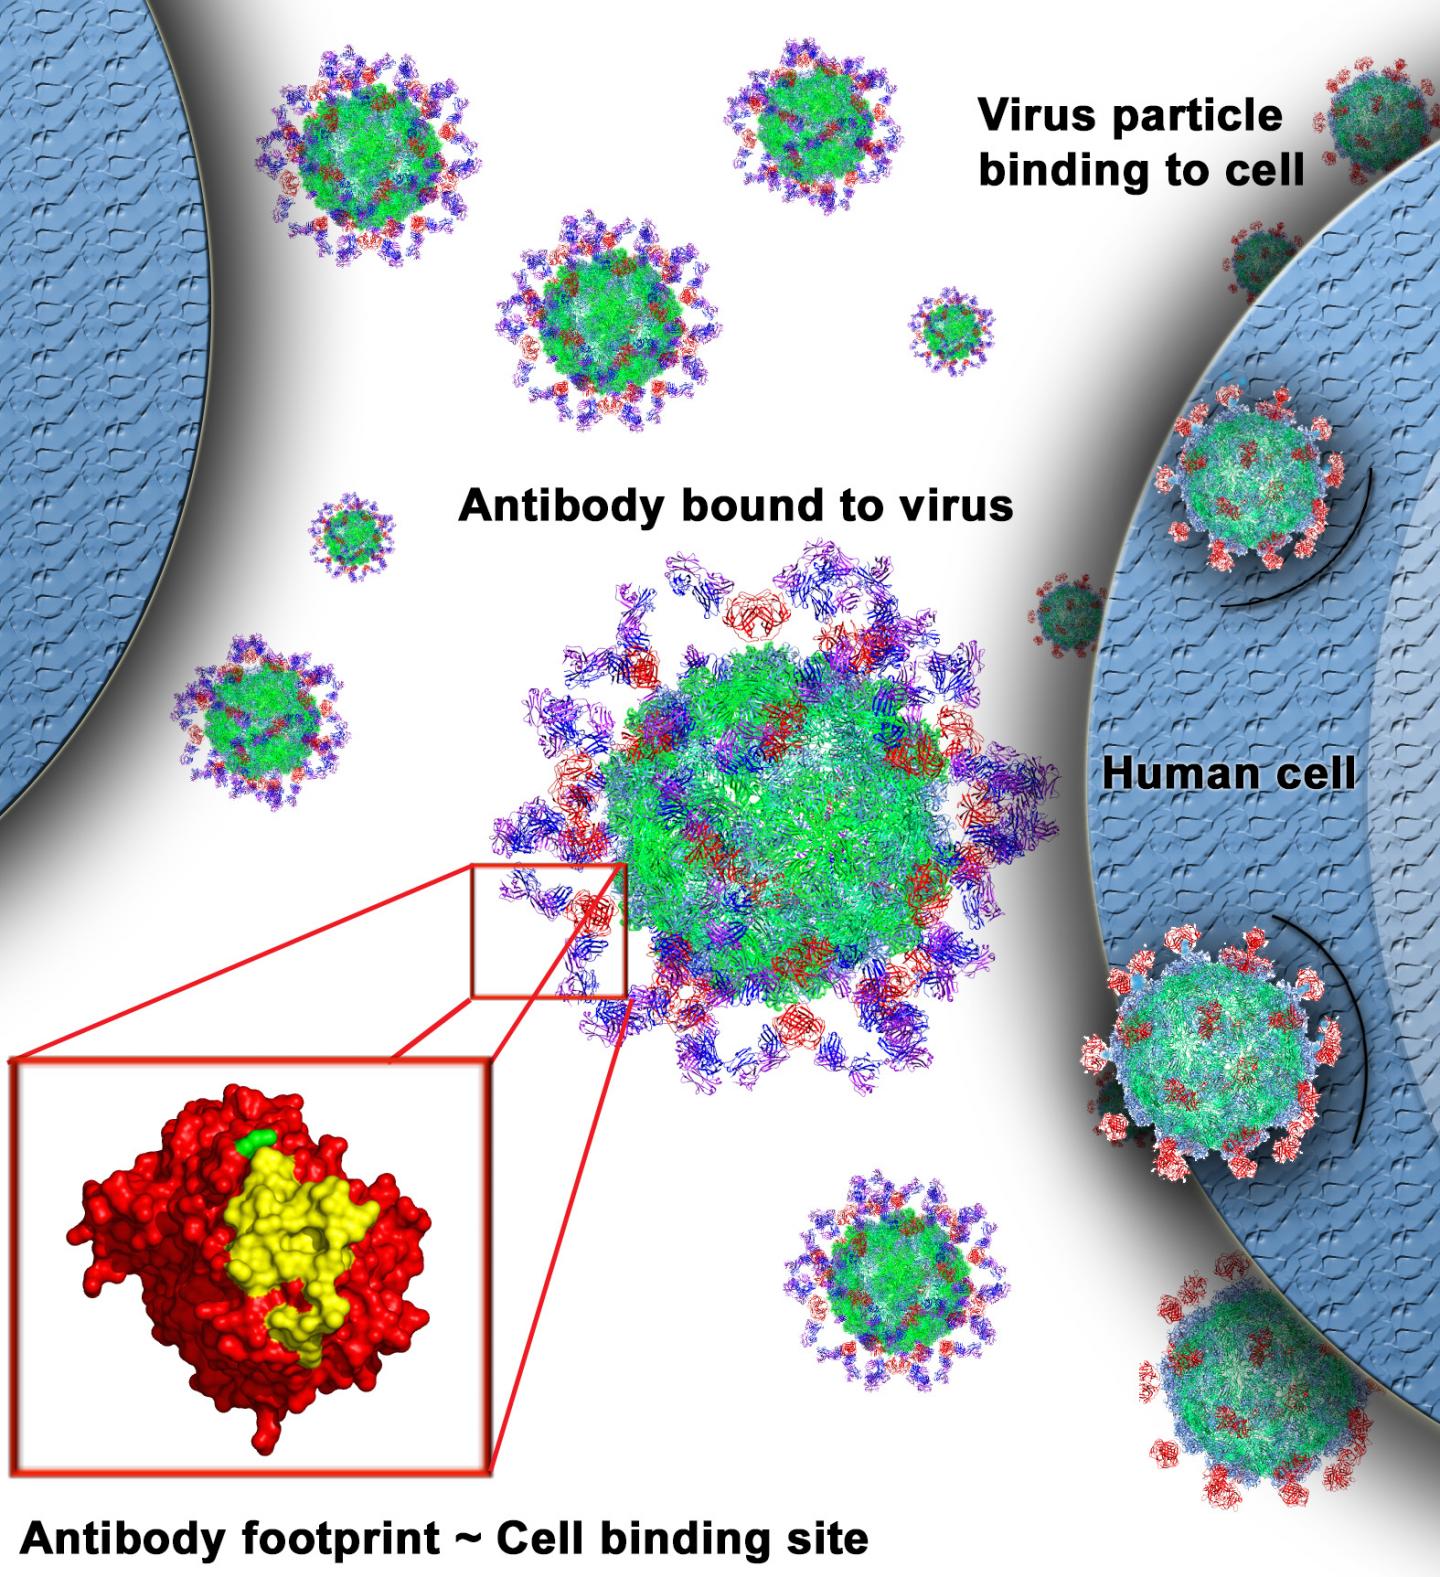 Astroviruses and Antibodies